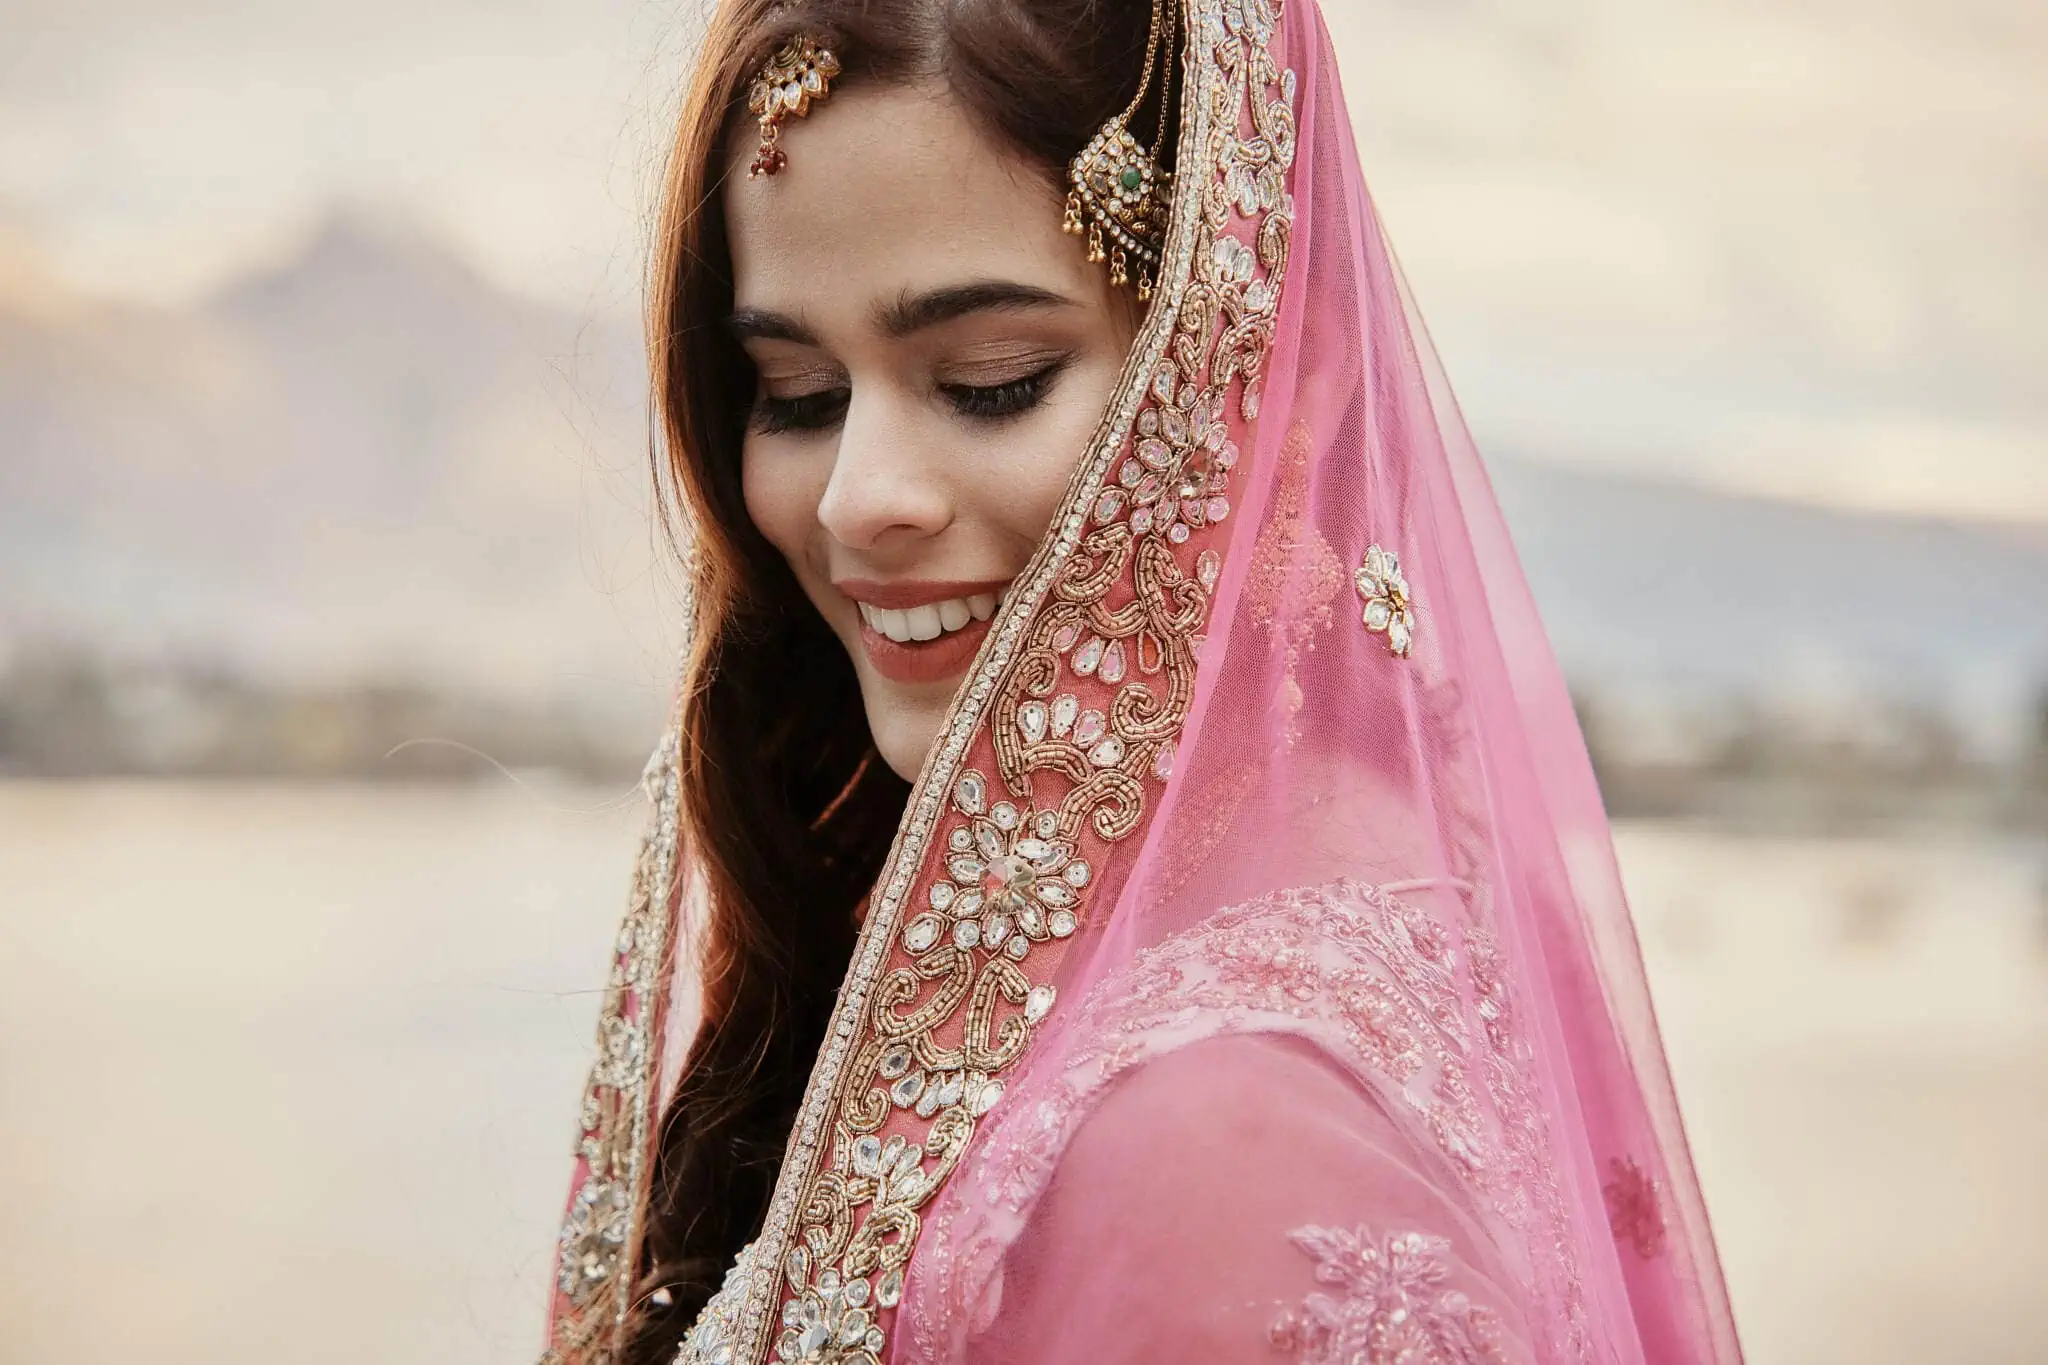 Queenstown New Zealand Elopement Wedding Photographer - Queenstown Islamic Wedding featuring a beautiful Indian bride in a pink sari.